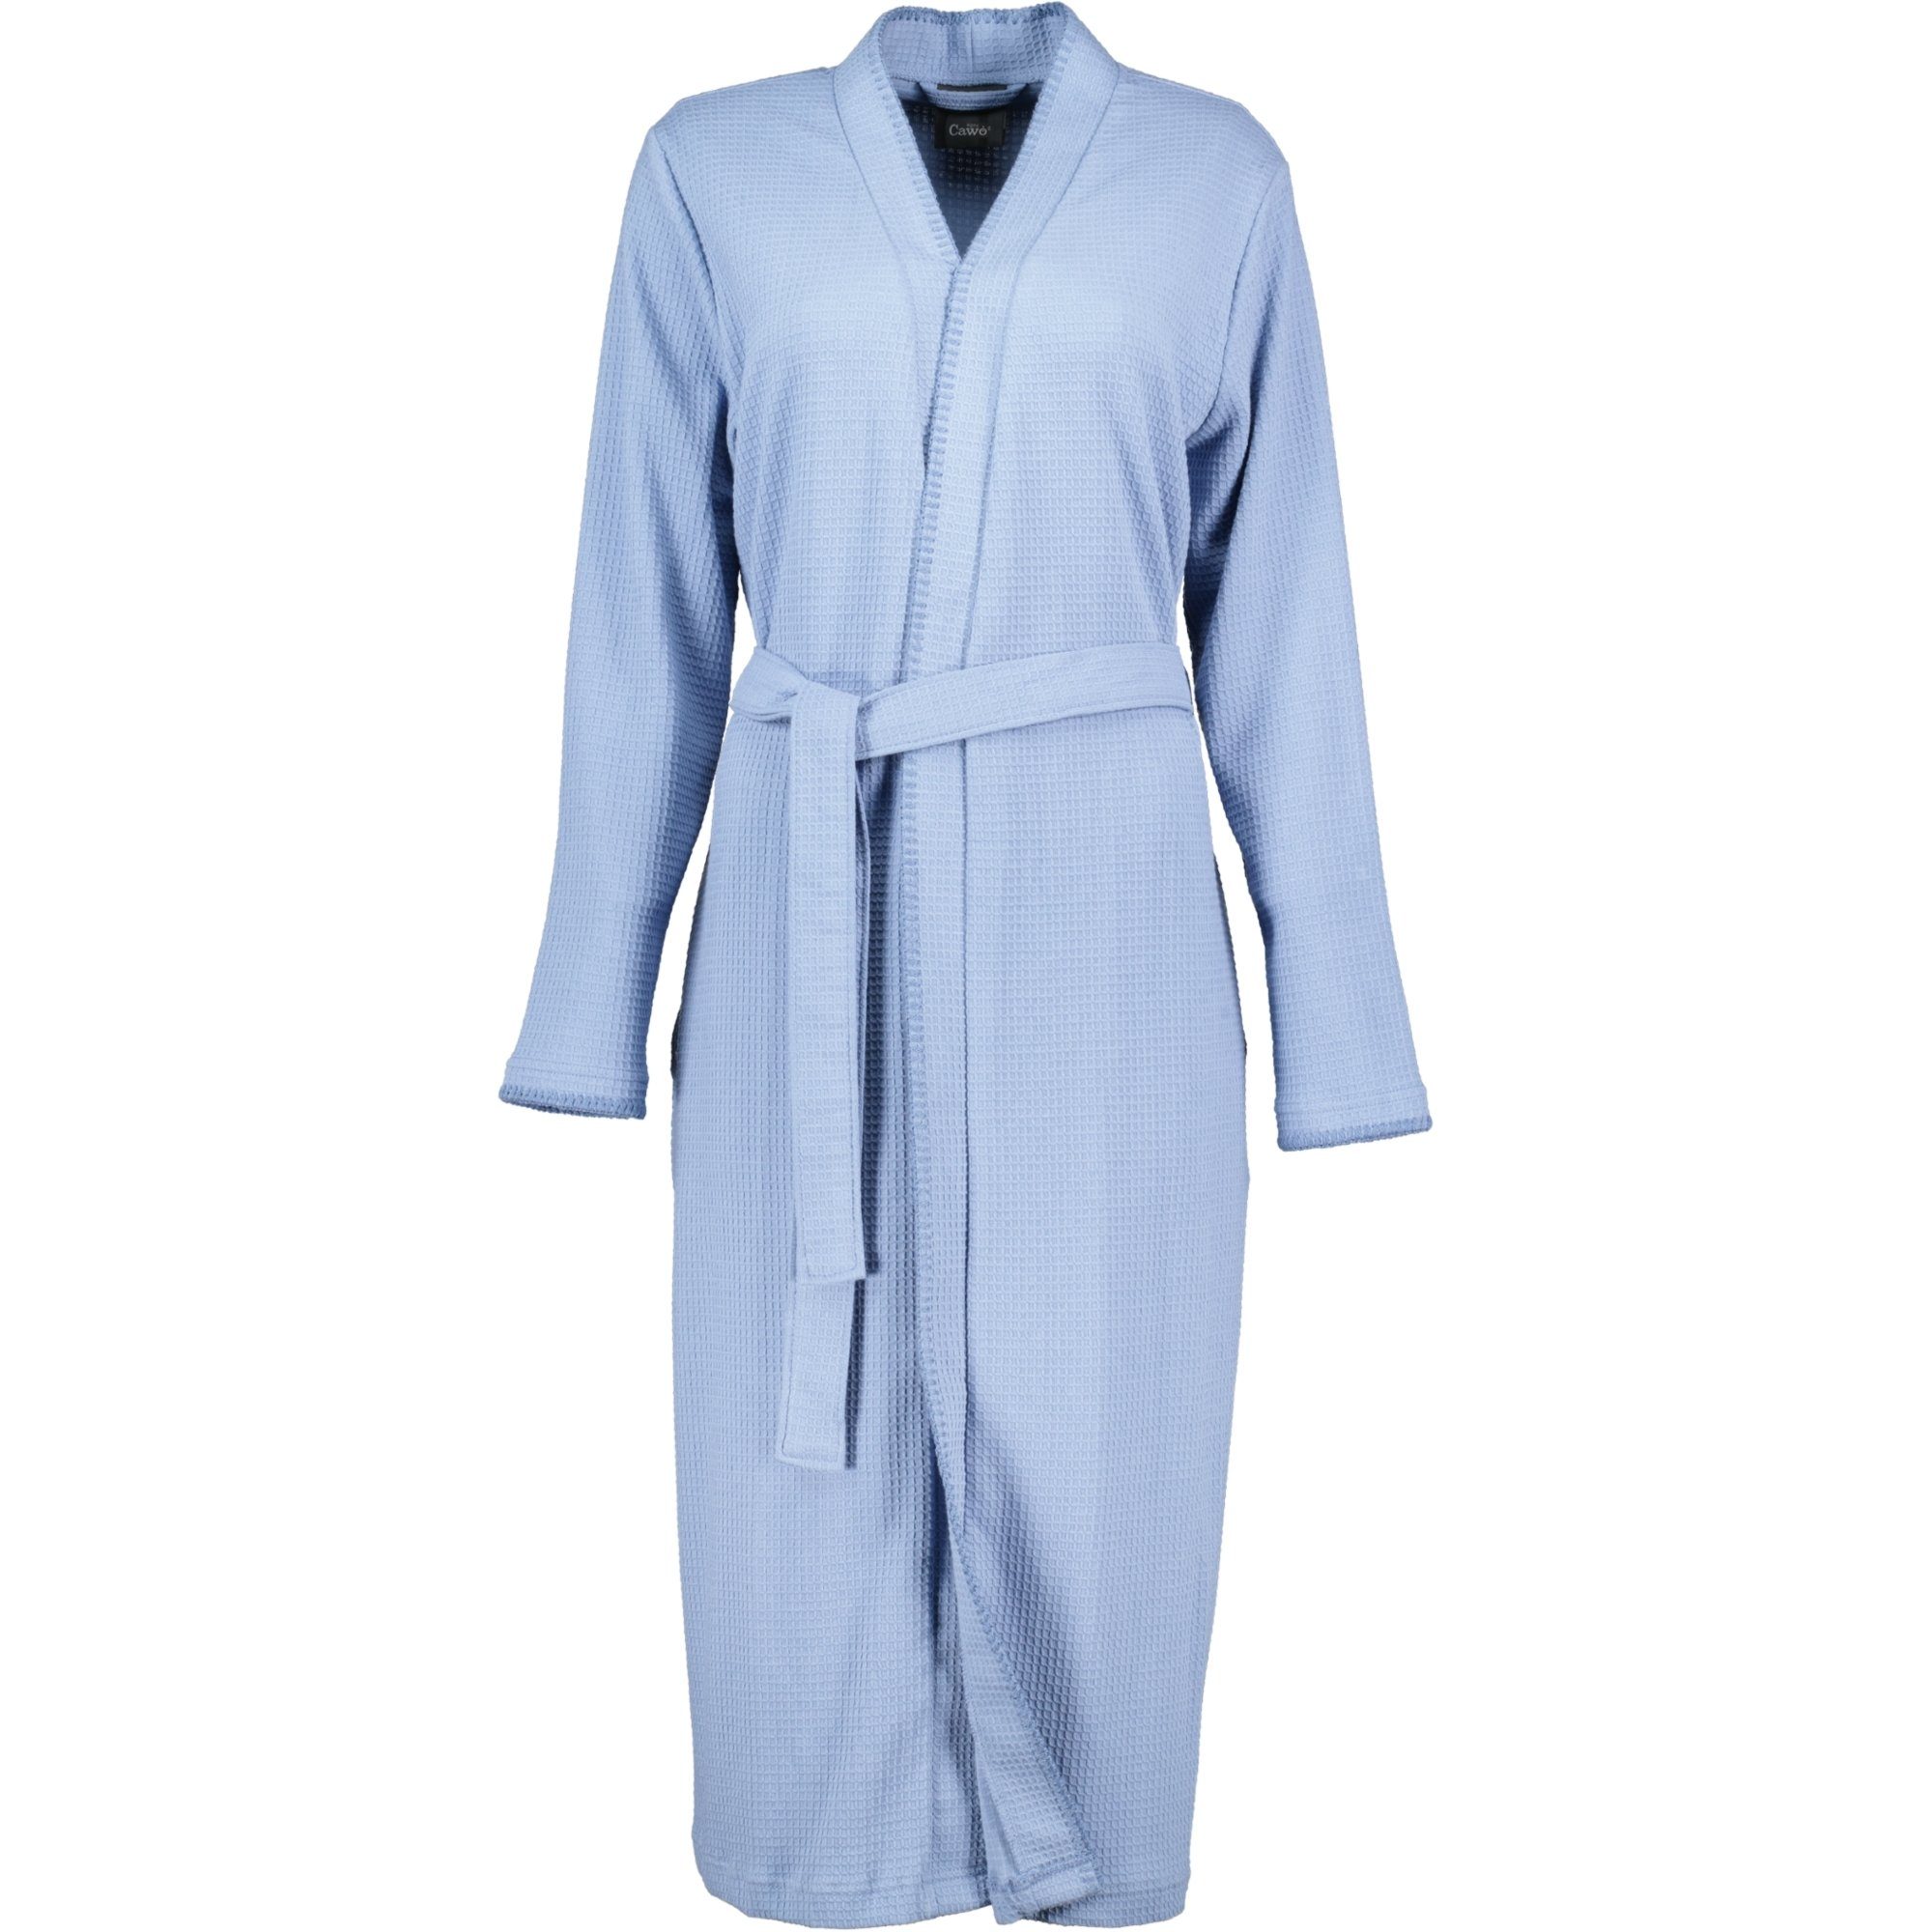 Cawö Home Damenbademantel Pique % 812 Pique, blau 100 Kimono, Kimono Baumwolle